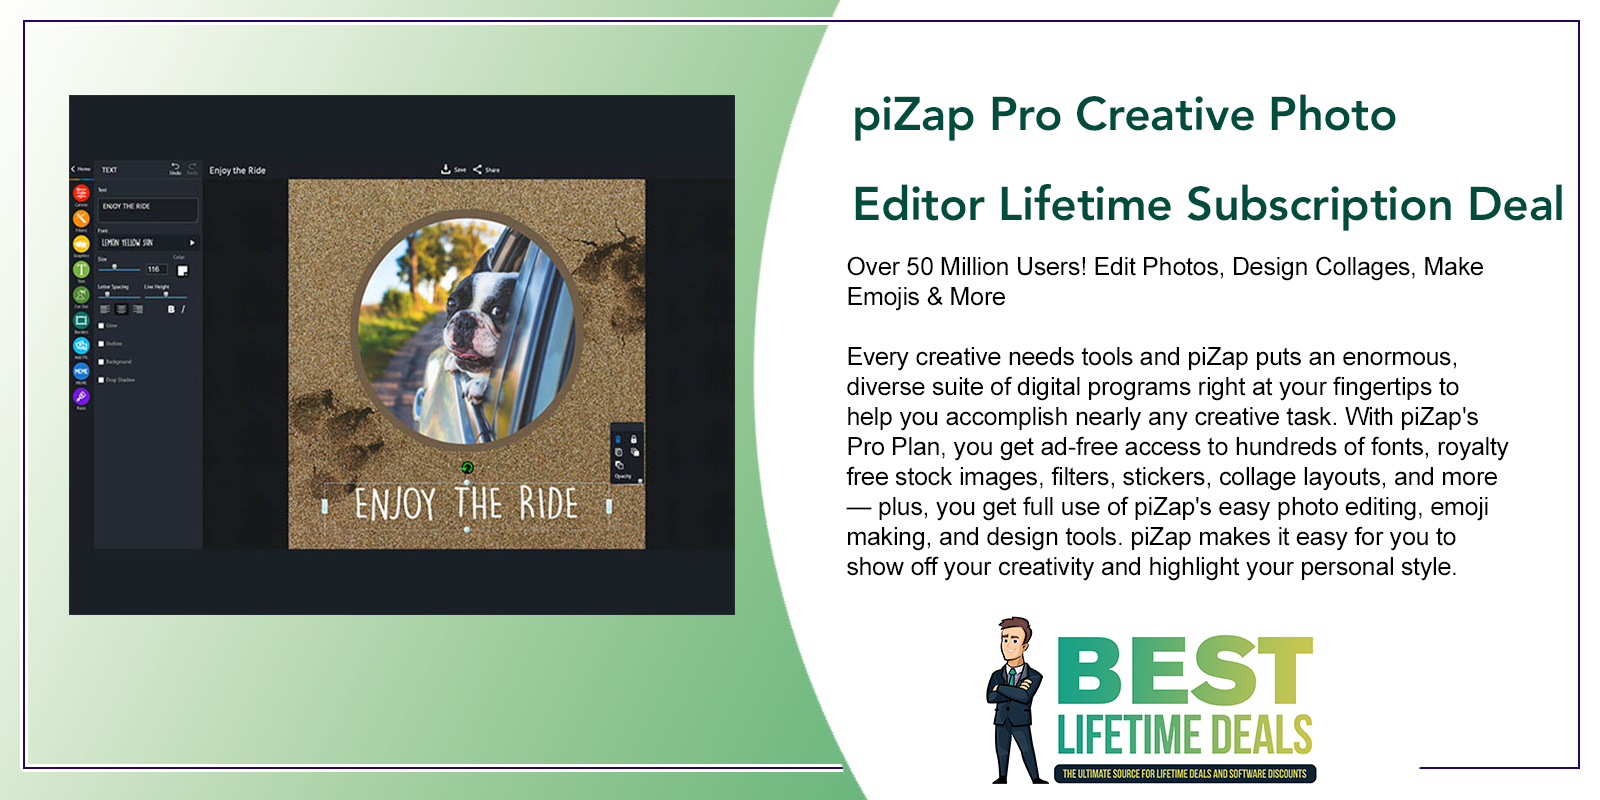 piZap Pro Creative Photo Editor Lifetime Subscription Deal Featured Image